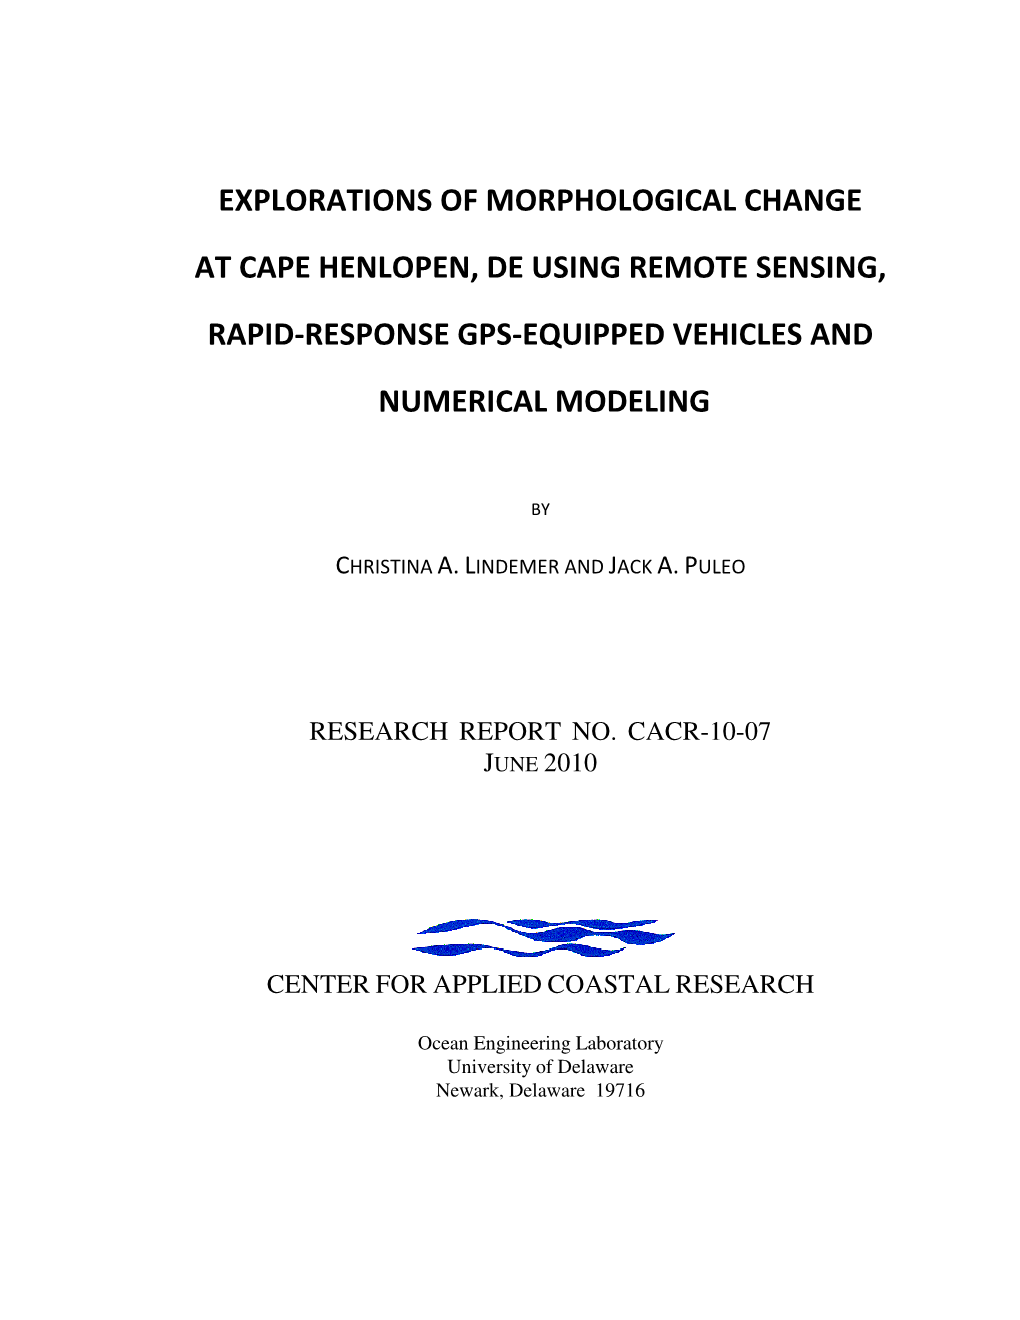 Explorations of Morphological Change